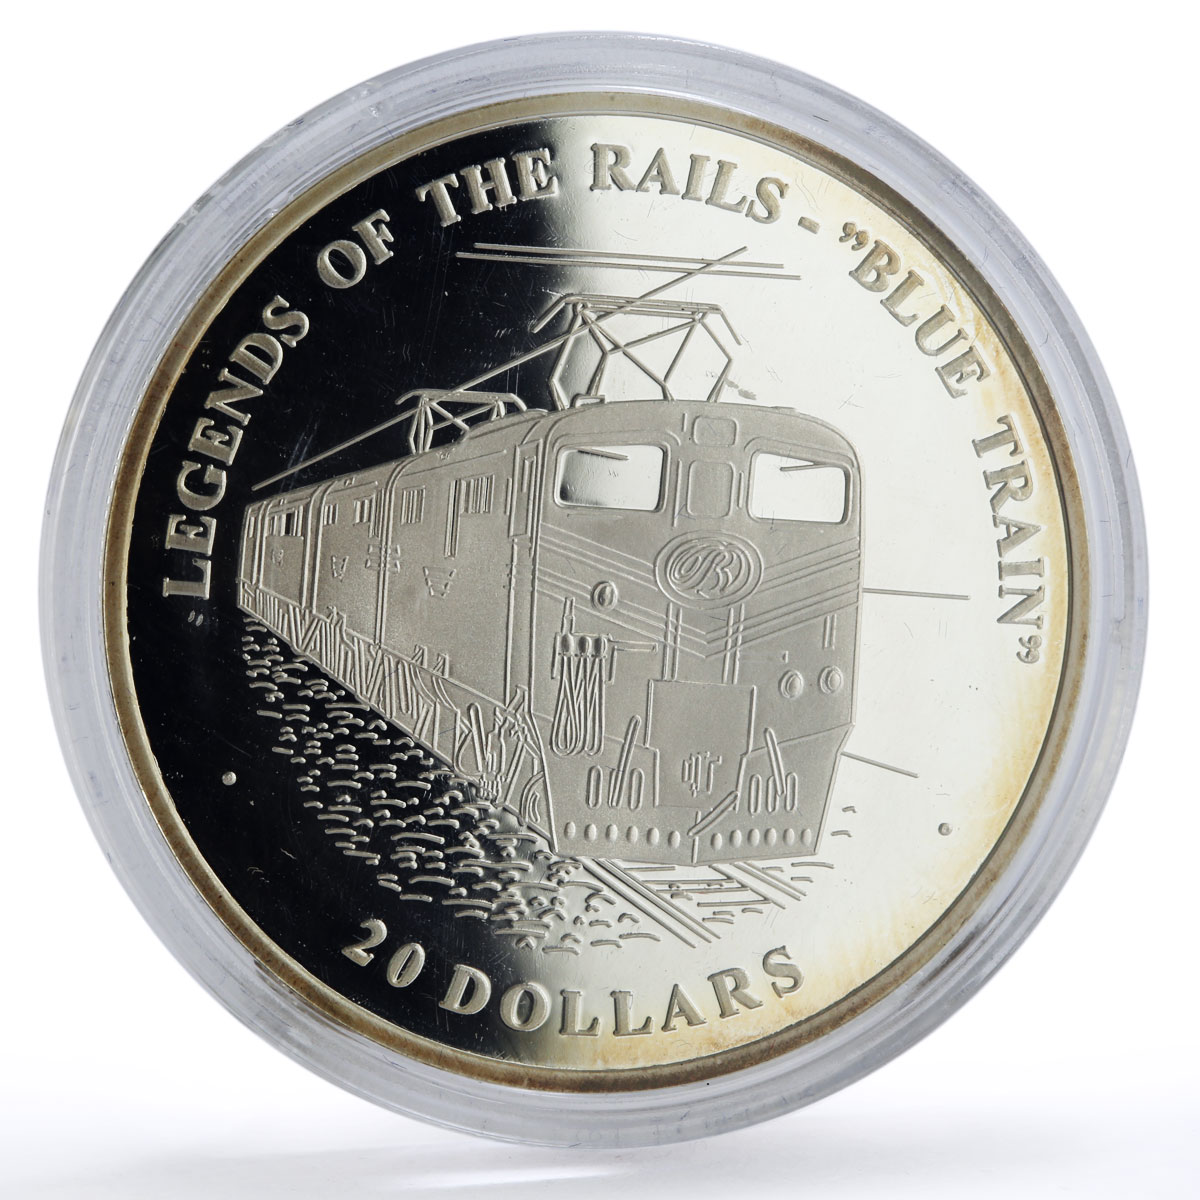 Liberia 20 dollars Trains Railway Locomotive Blue Train silver coin 2003